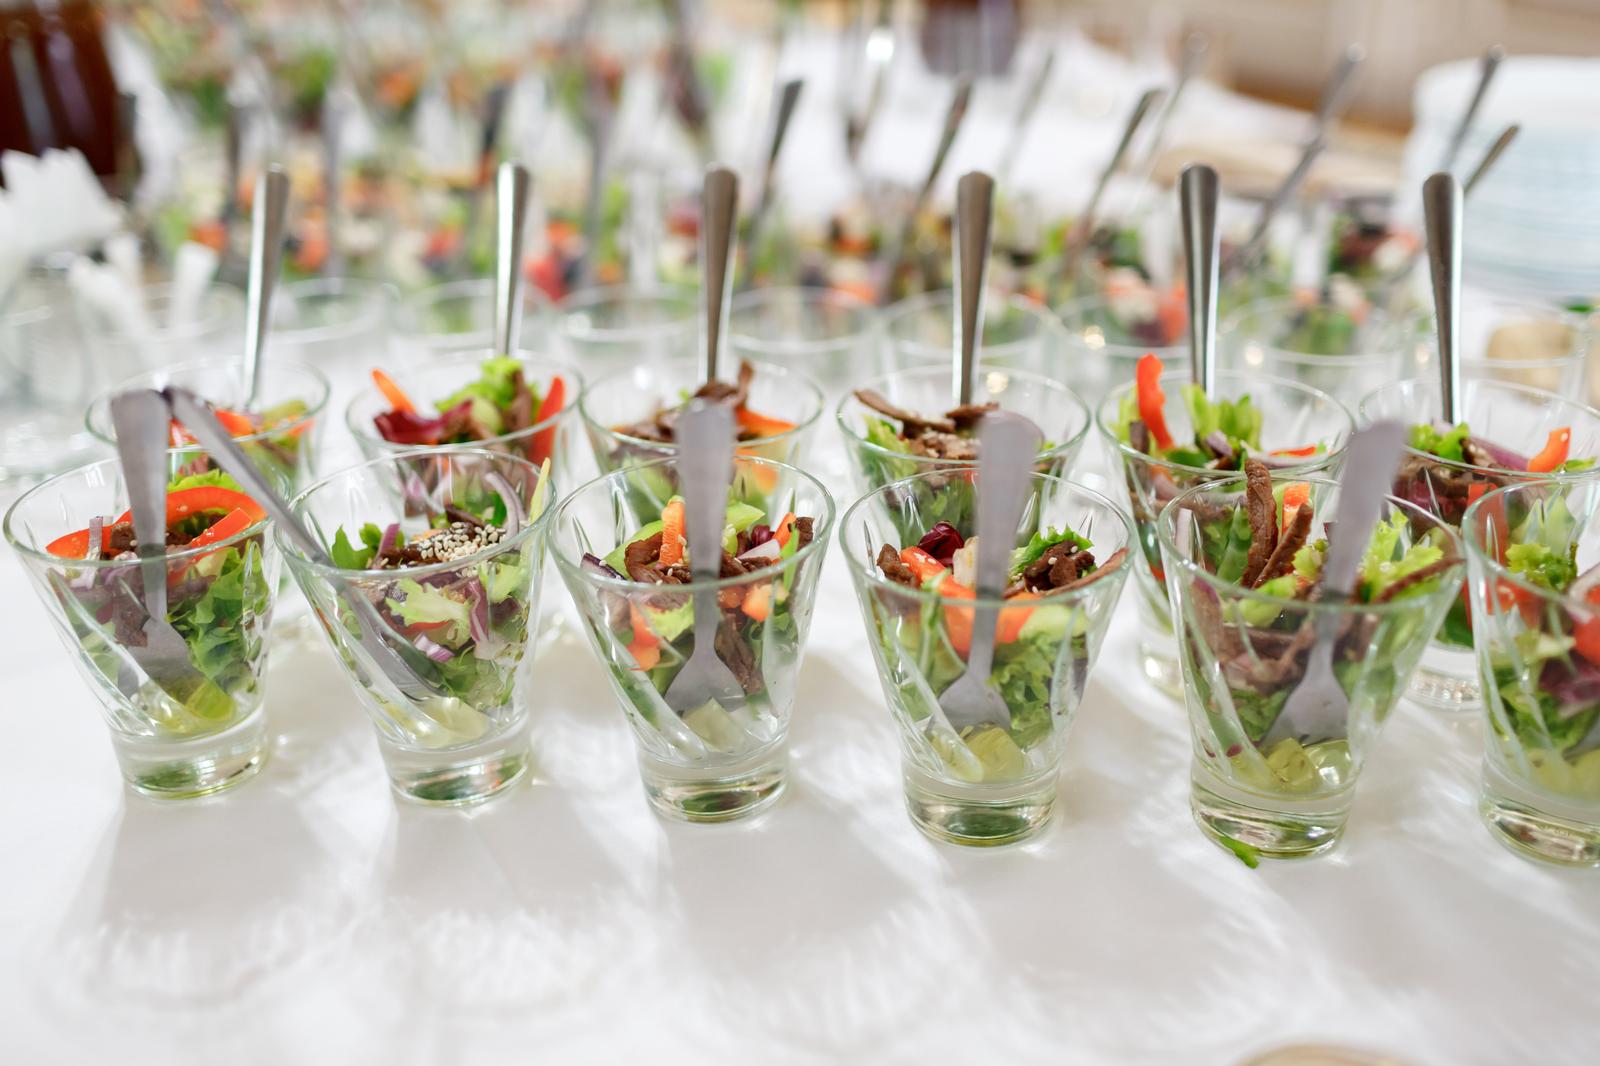 CREATIVE FOOD SOLUTIONS OÜ - Event catering activities in Estonia